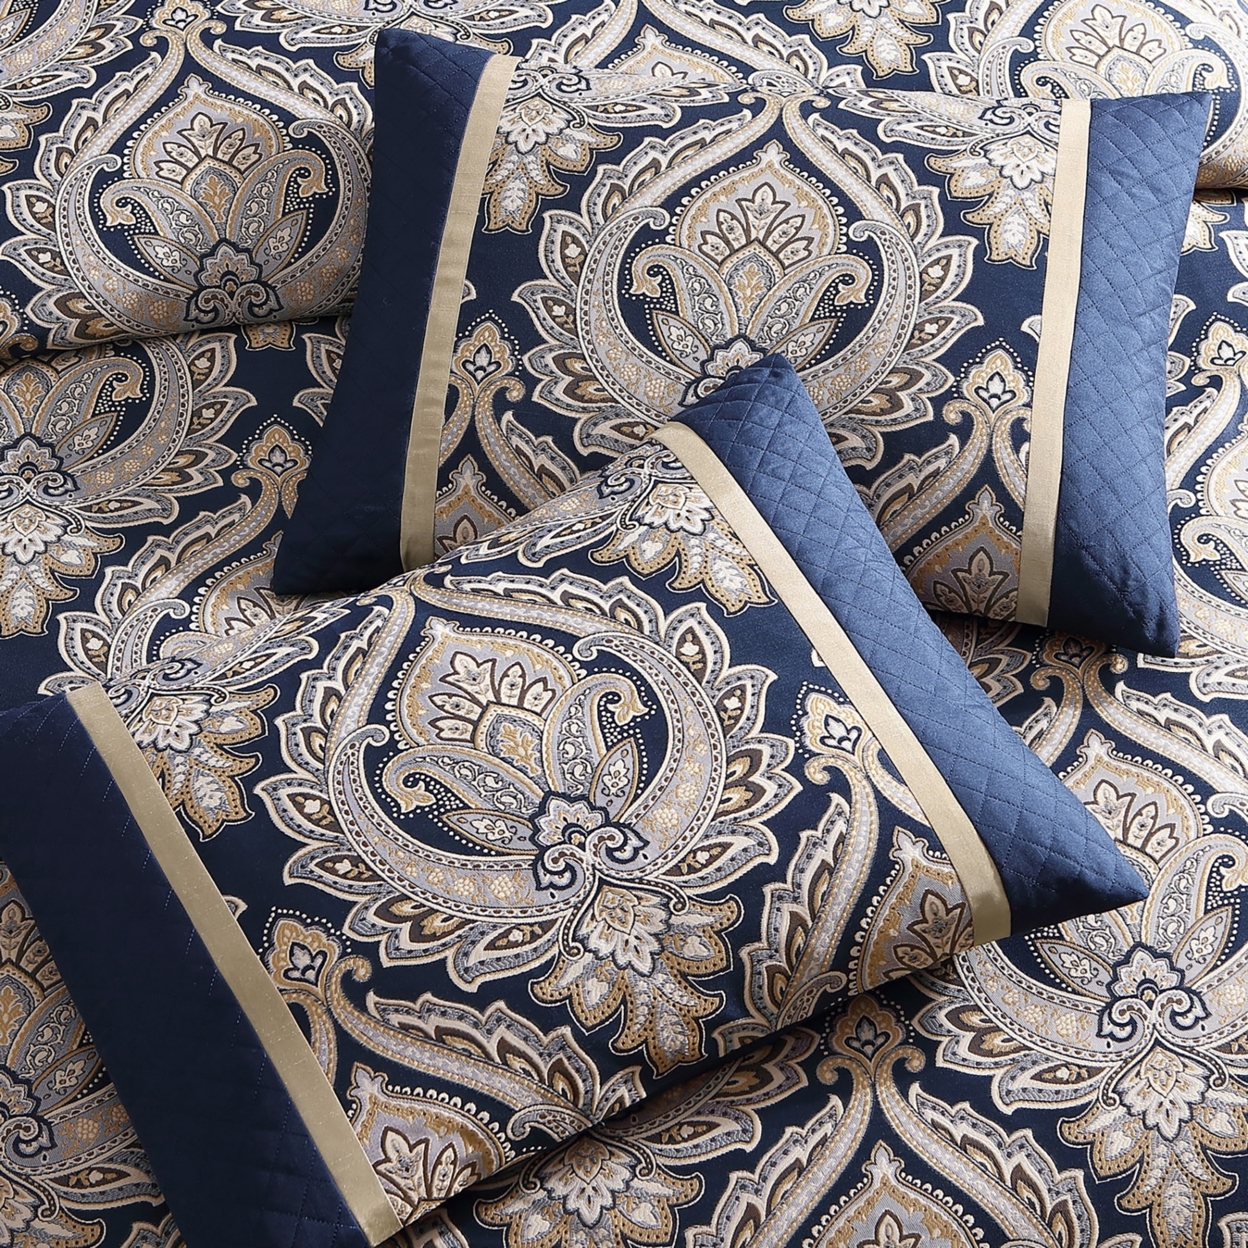 Nova 10 Piece Polyester King Comforter Set, Gold Damask Print, Navy Blue- Saltoro Sherpi